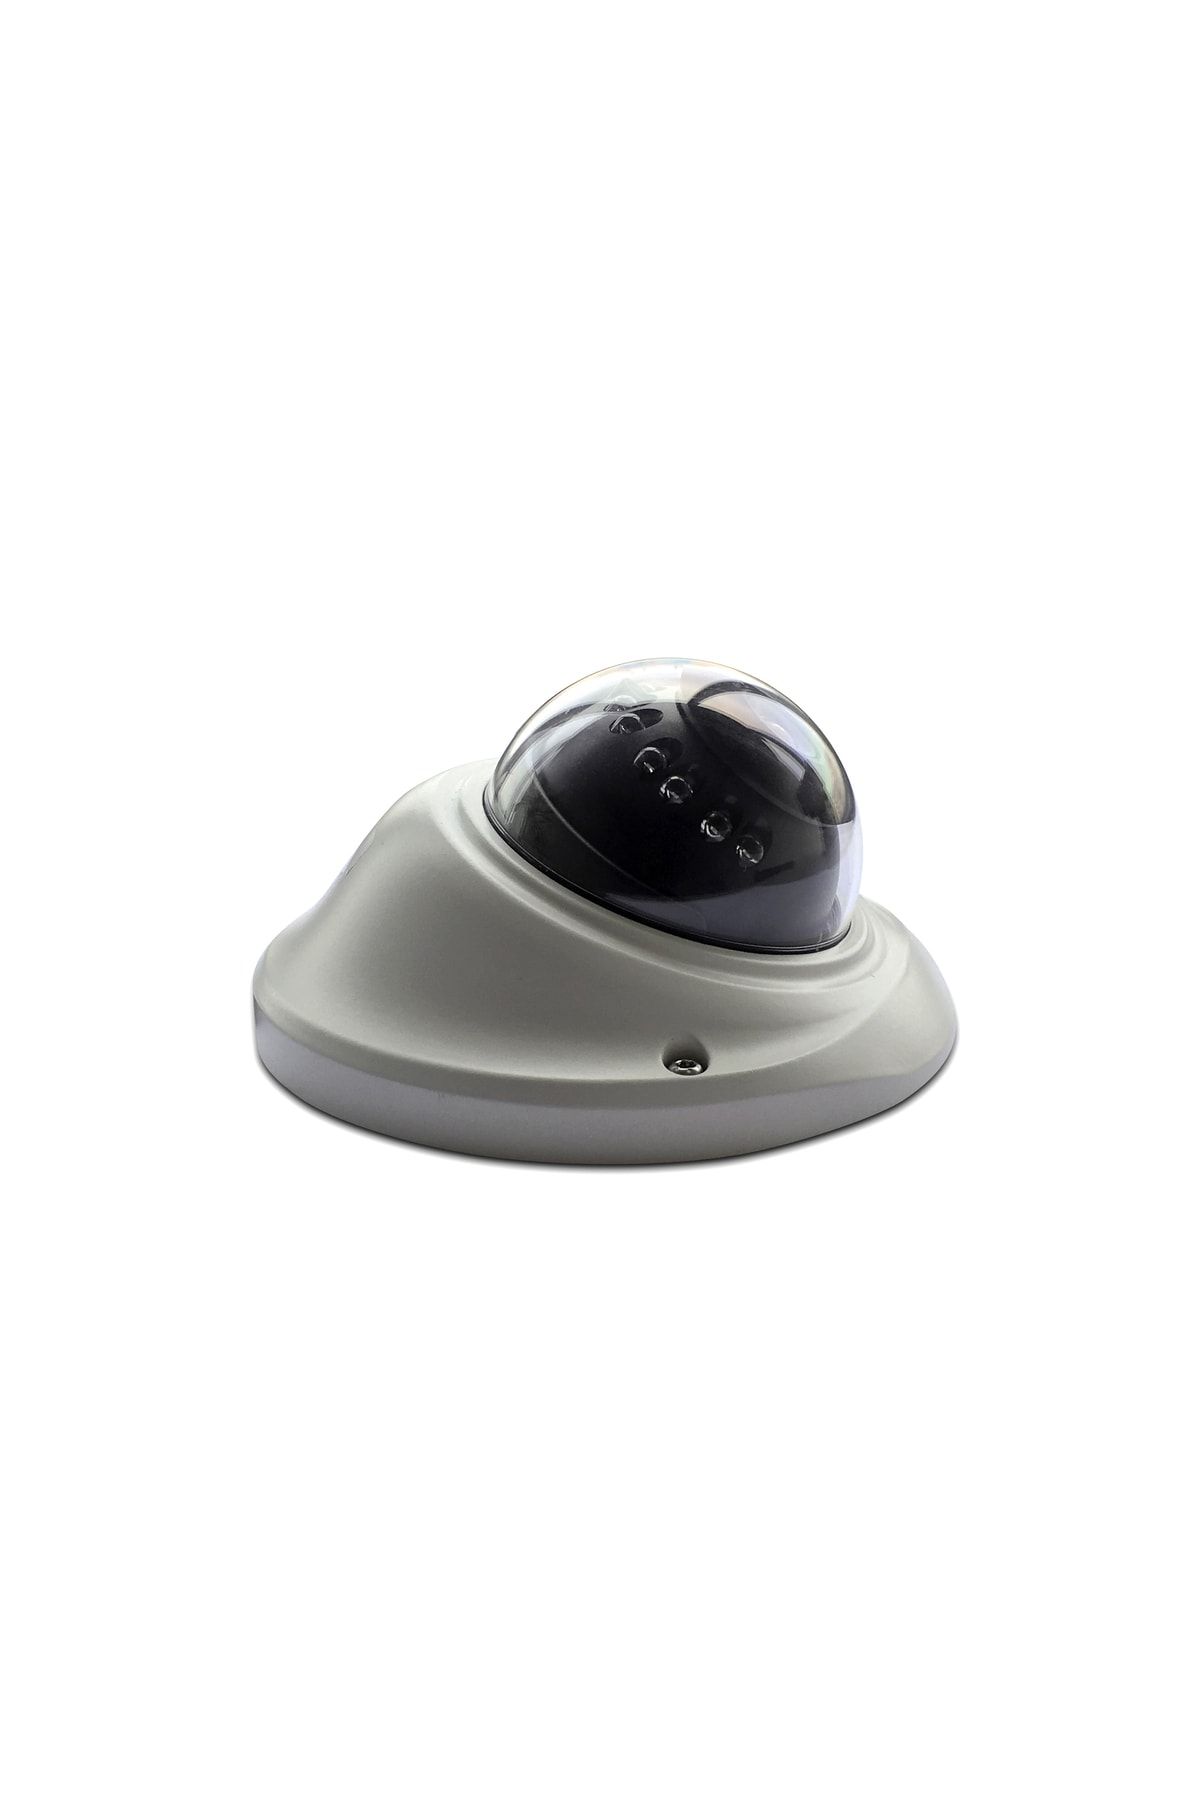 Unique Unıque ® Uq-322c11 Ahd Metal Kasa Dome Araç Güvenlik Kamerası